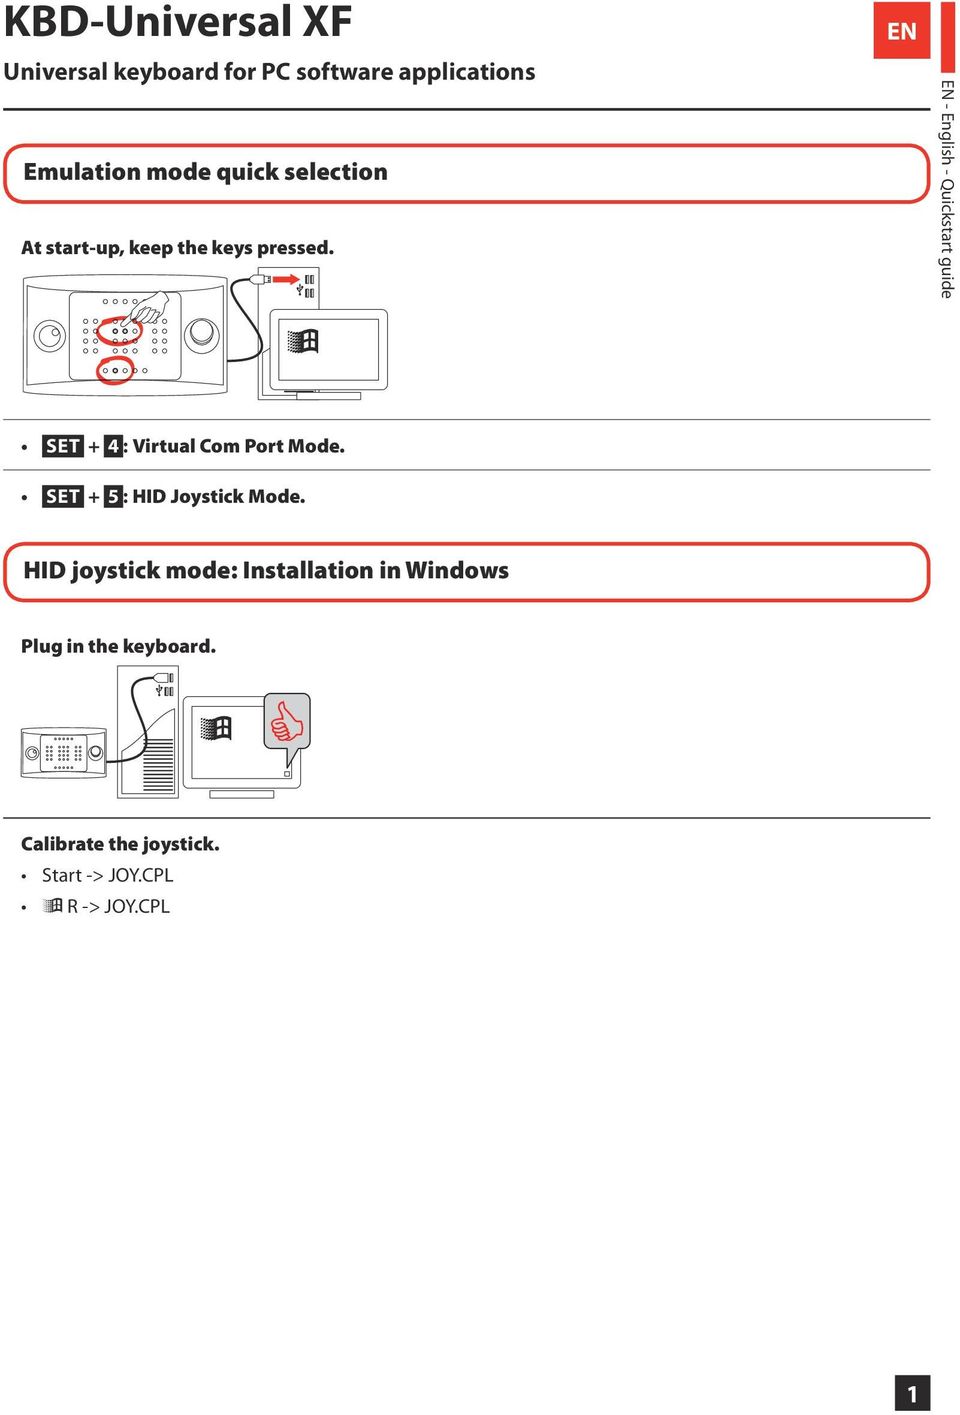 EN EN - English - Quickstart guide SET + 4 : Virtual Com Port Mode.